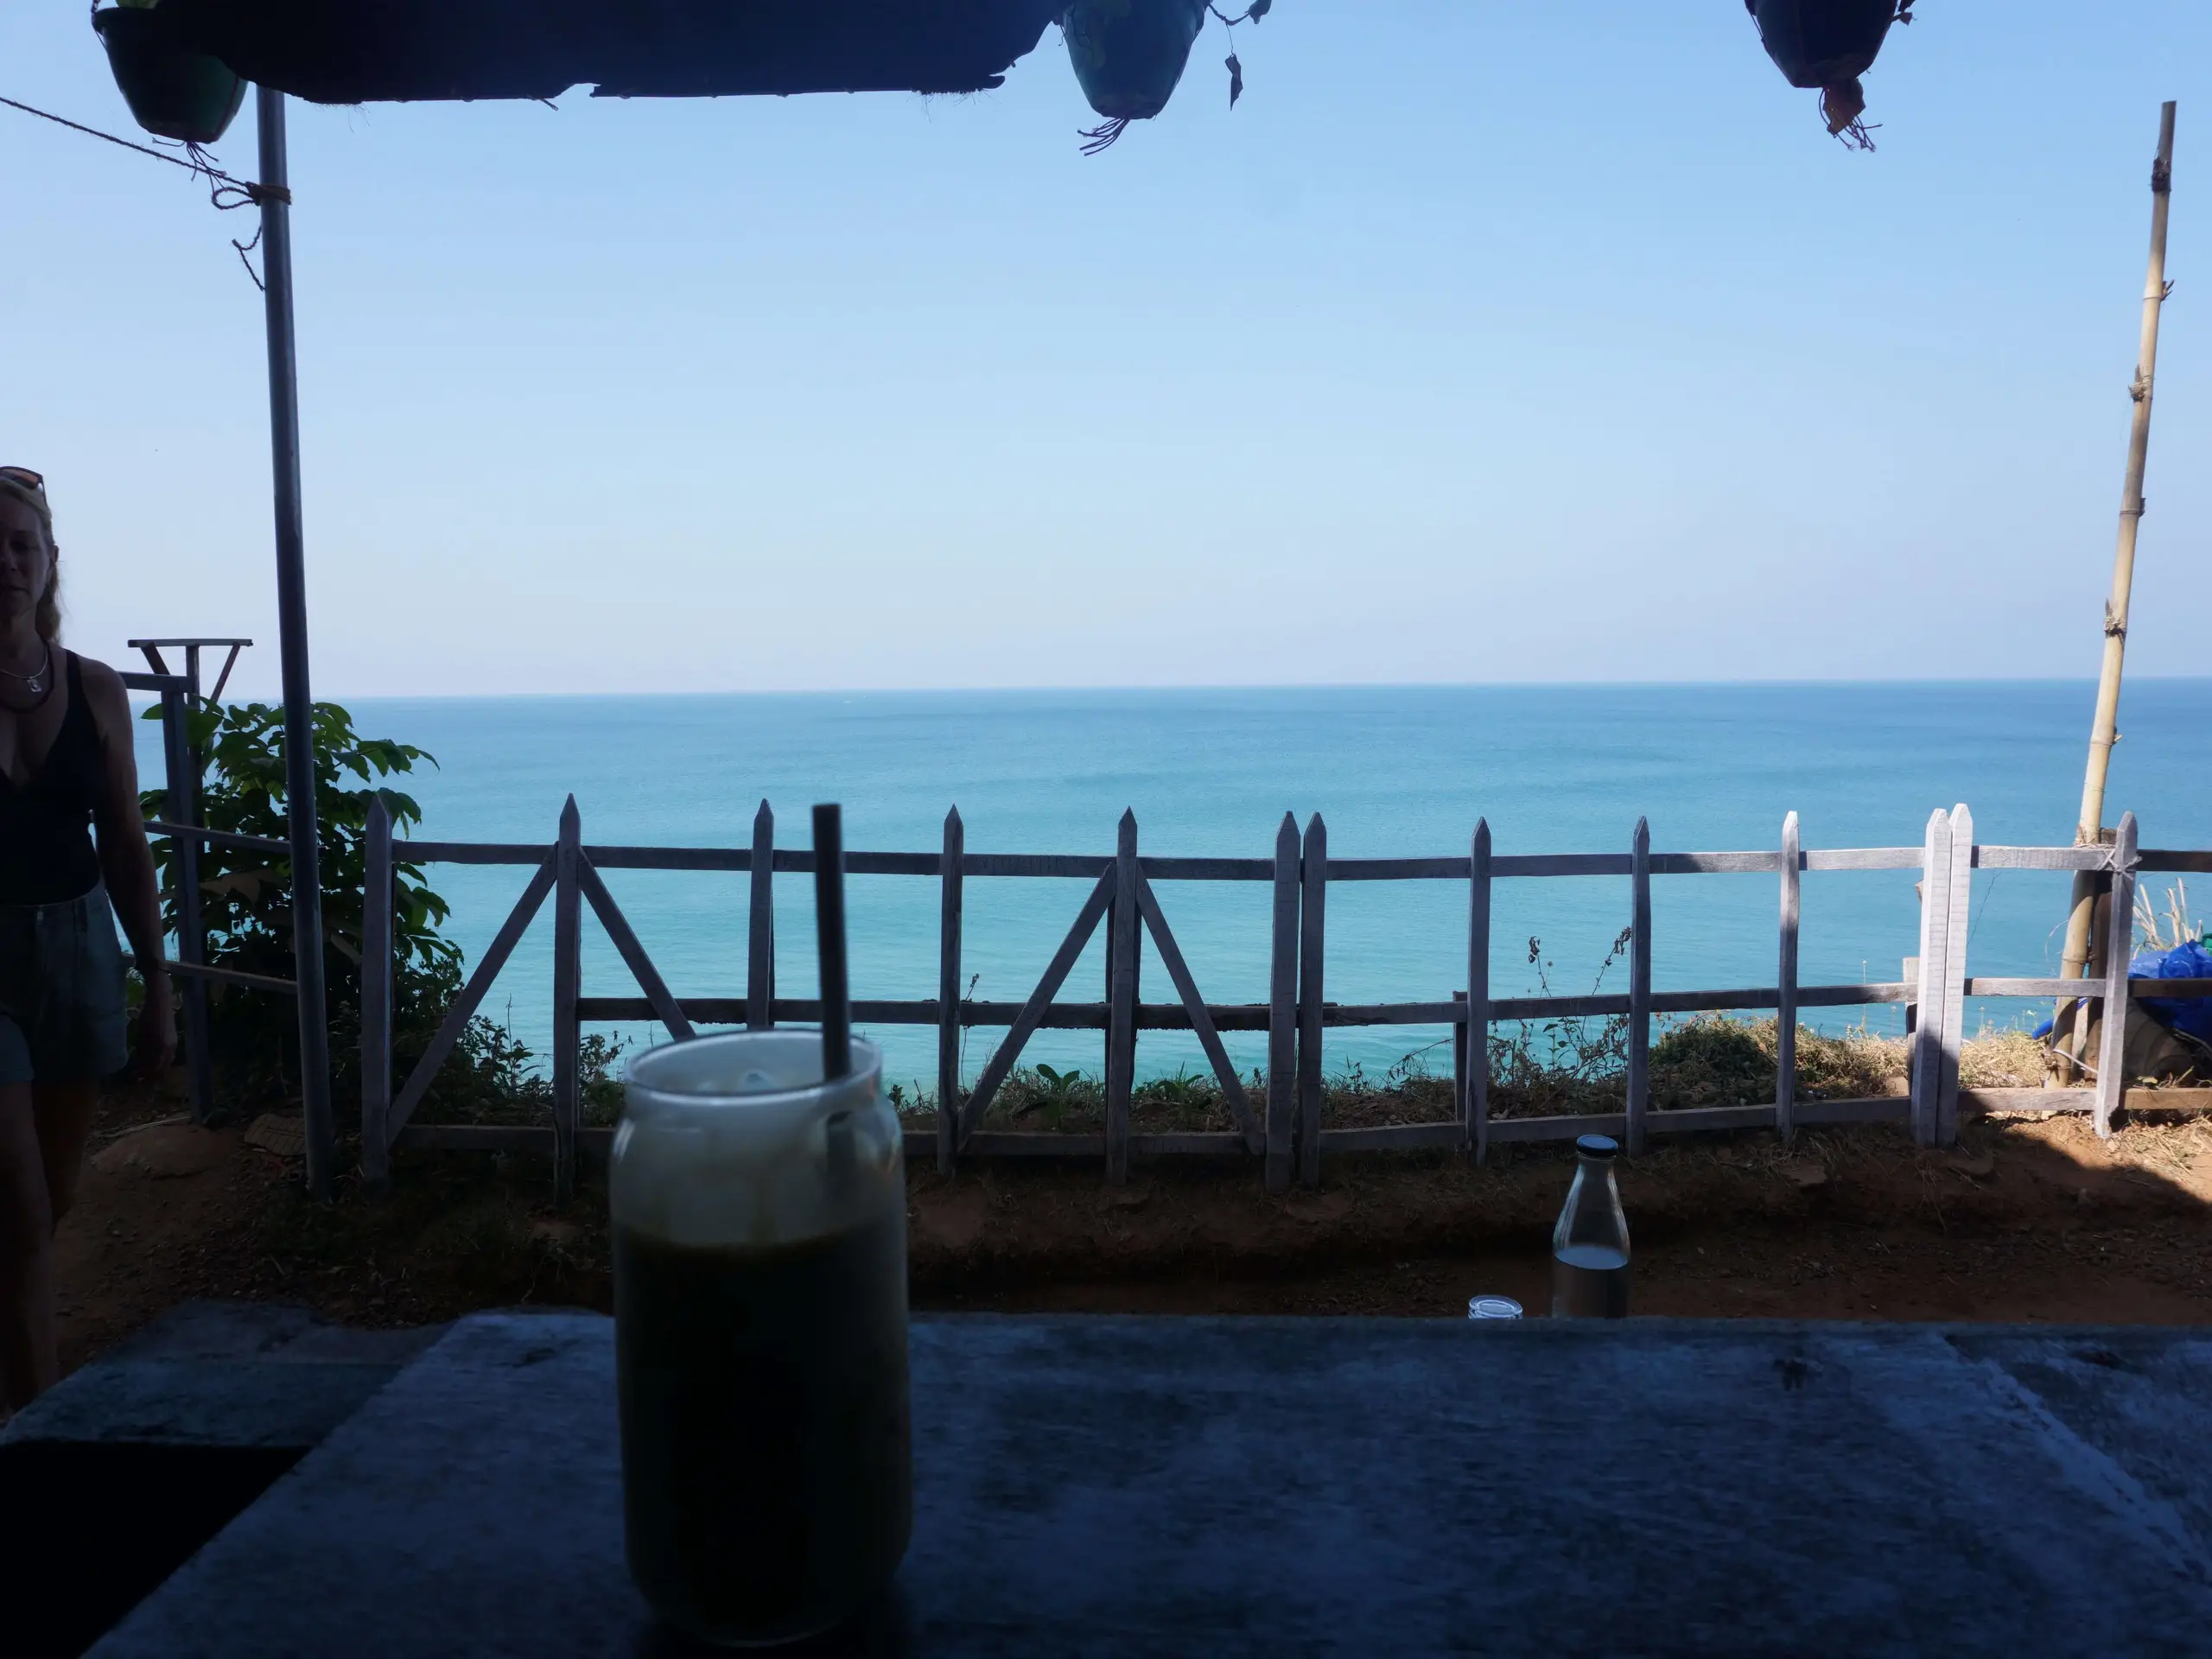 Aum cafe with sea views